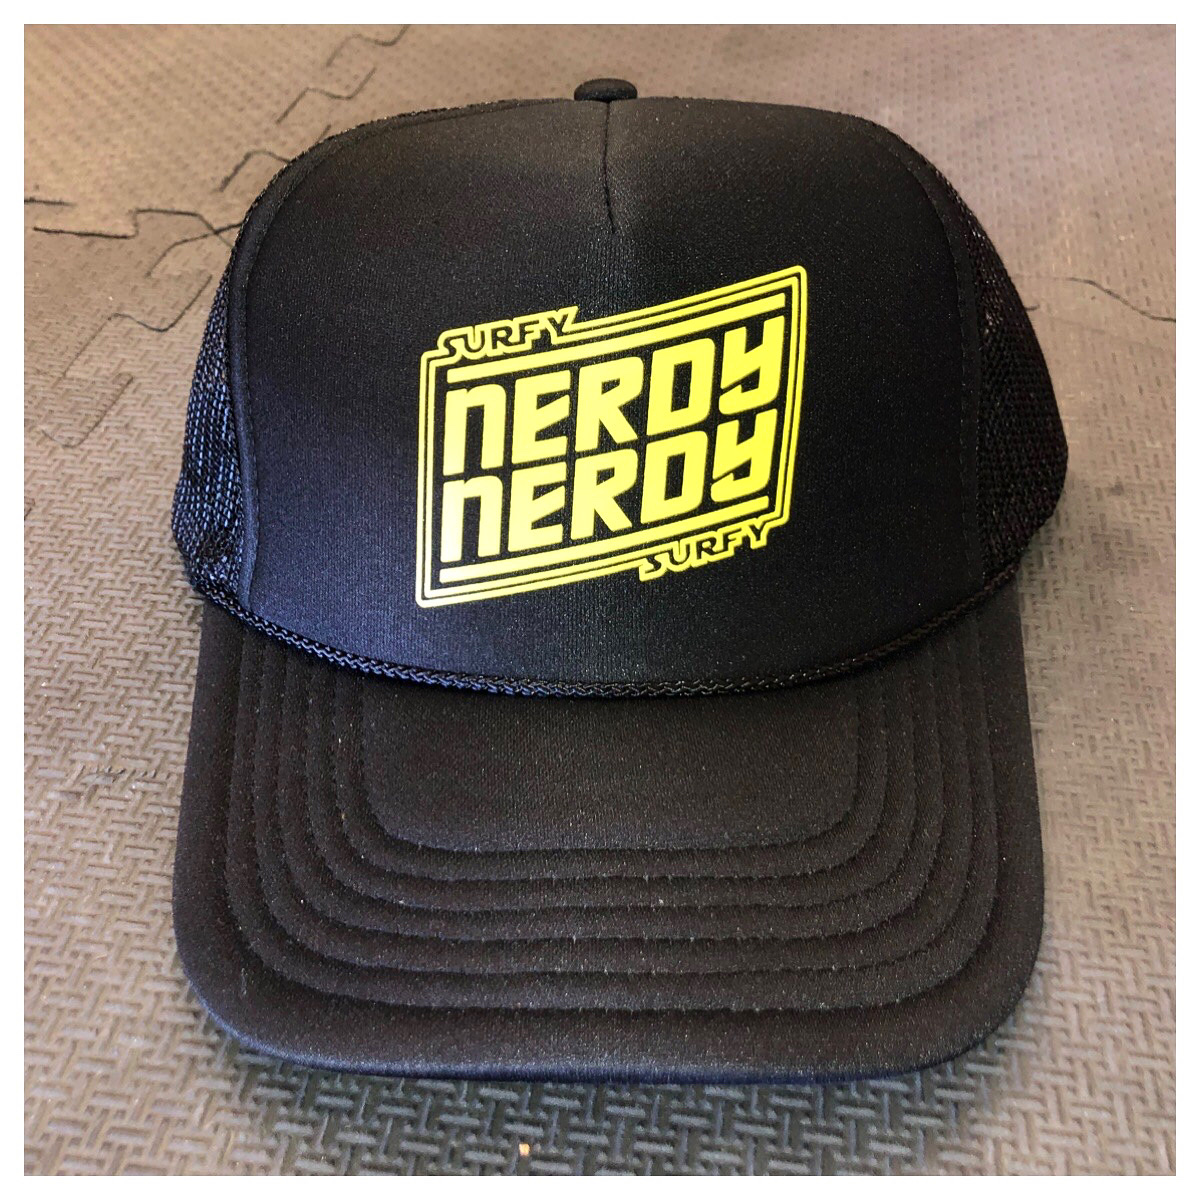 14th Anniversary Nerdy Nerdy hat